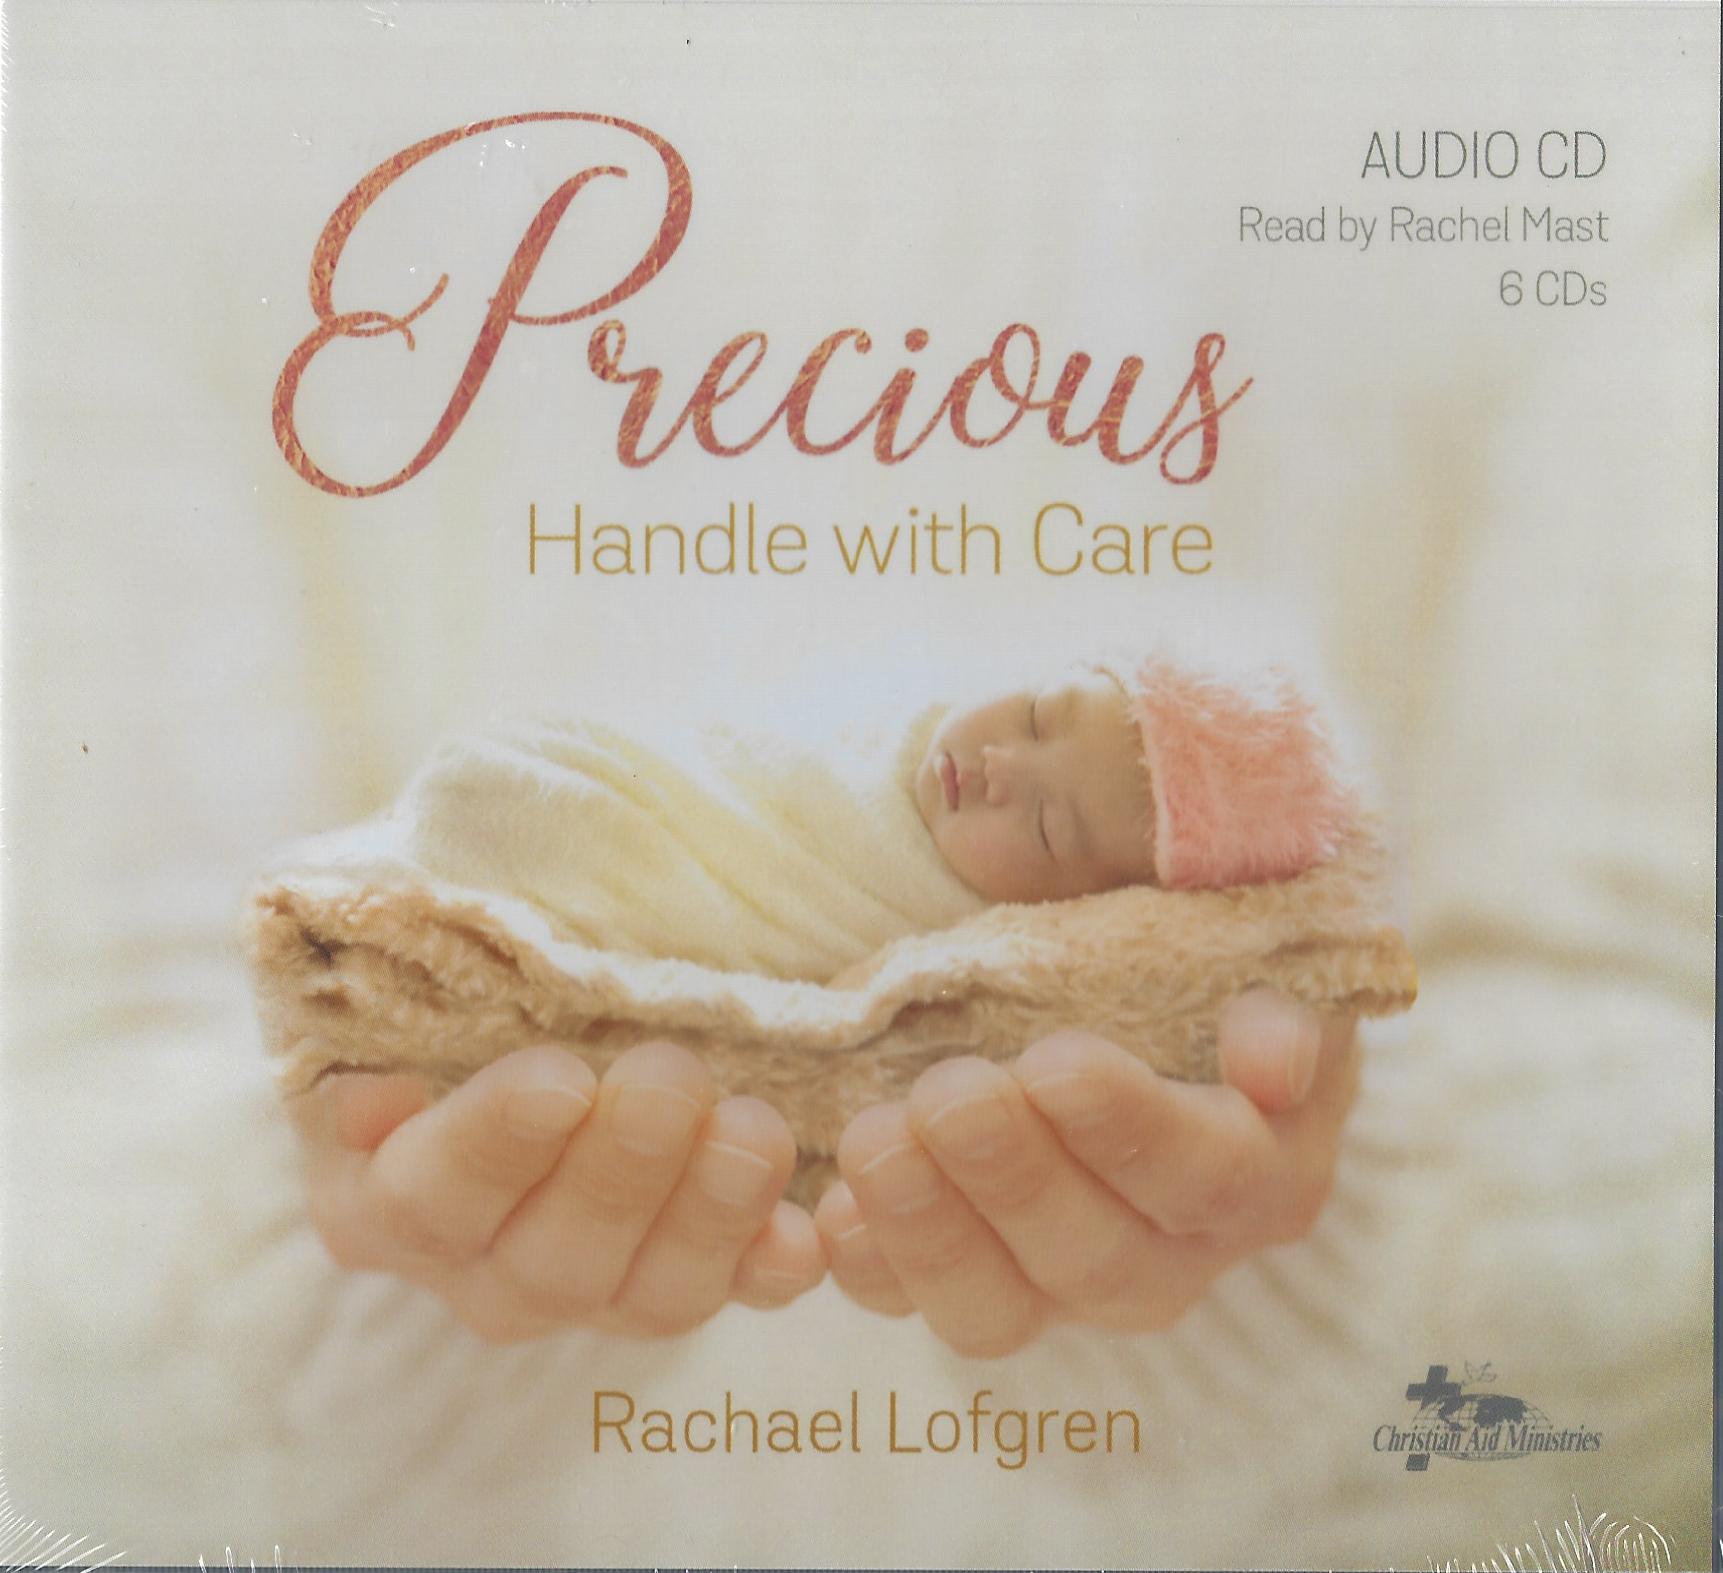 PRECIOUS: HANDLE WITH CARE - AUDIO CD Rachel Lofgren